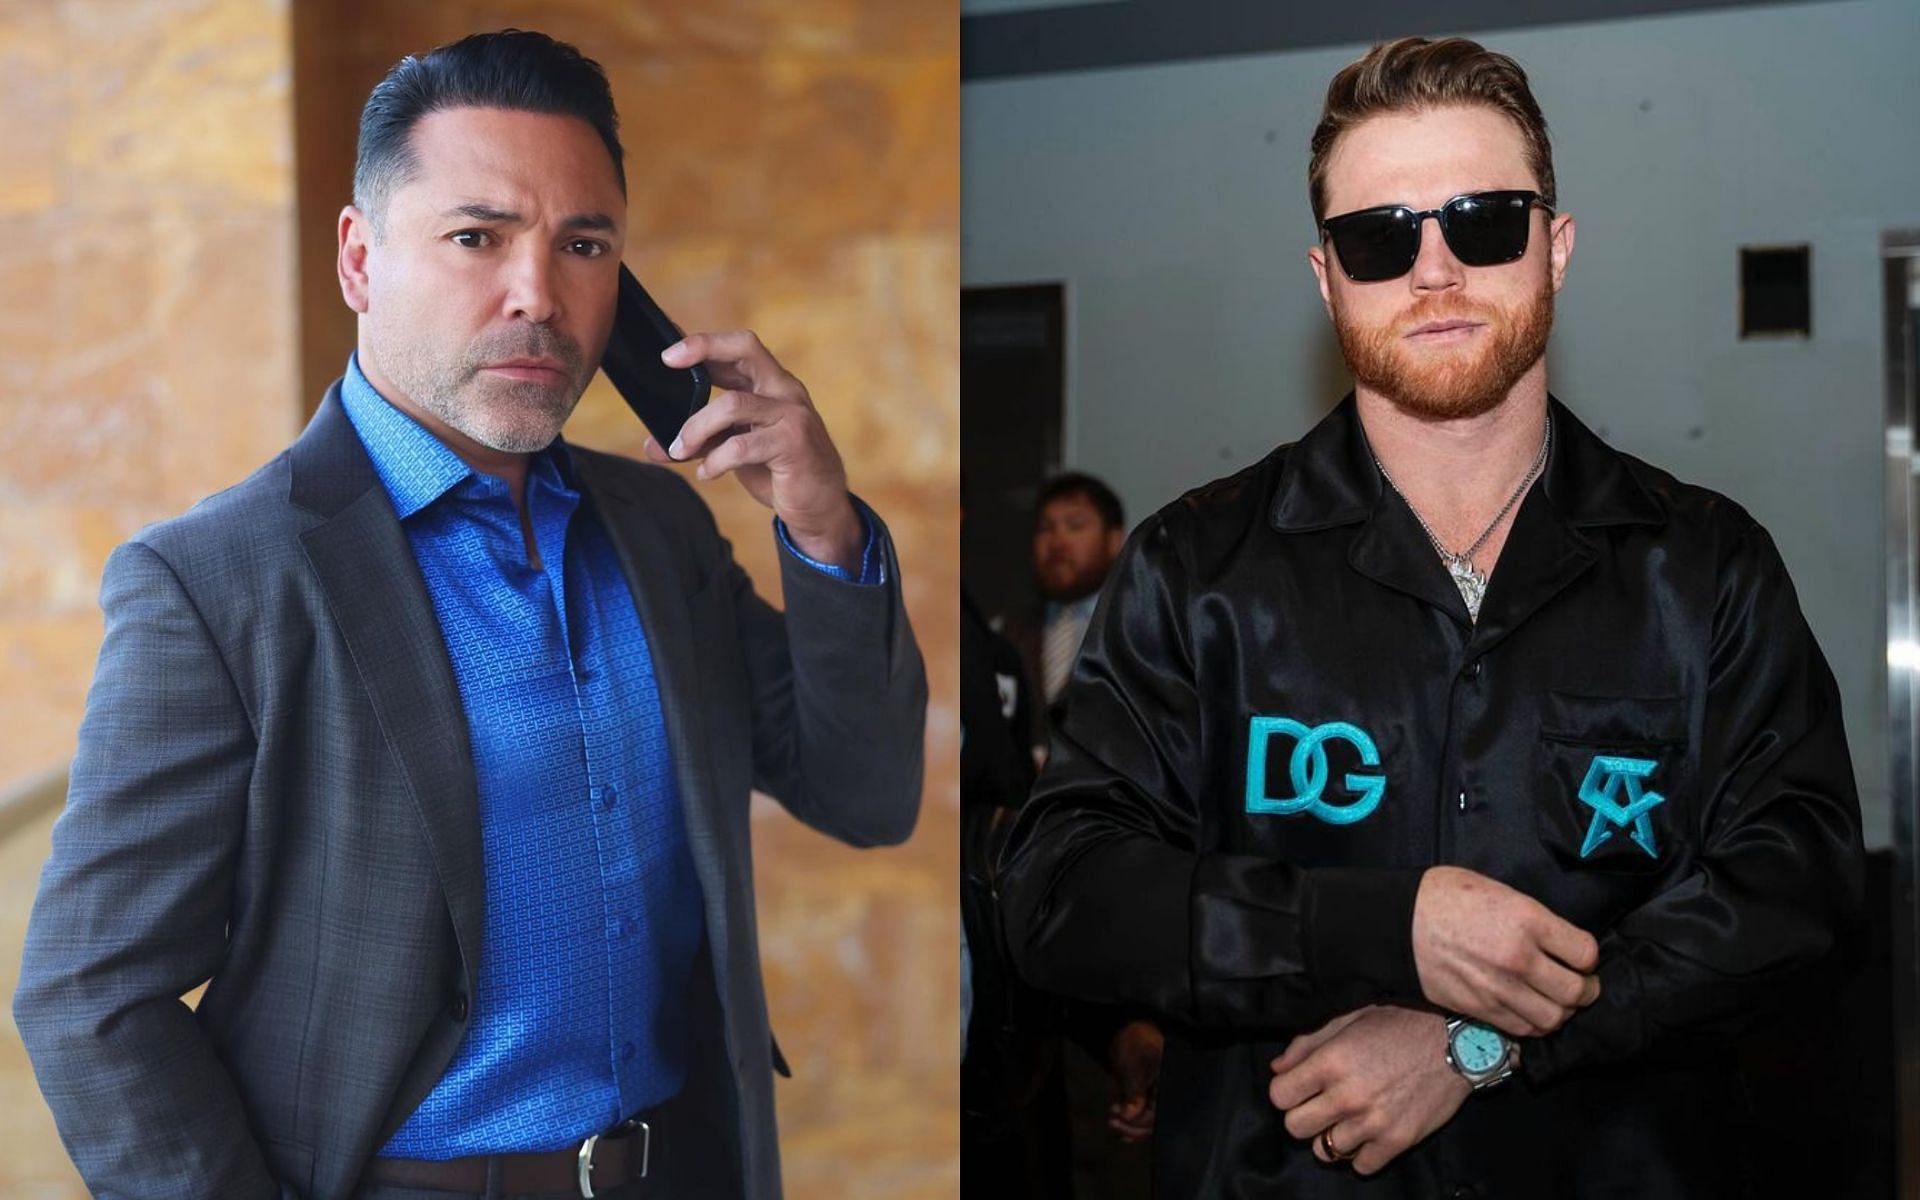 Oscar De La Hoya and Golden Boy Promotions serve legal notice to Canelo Alvarez over presser remarks